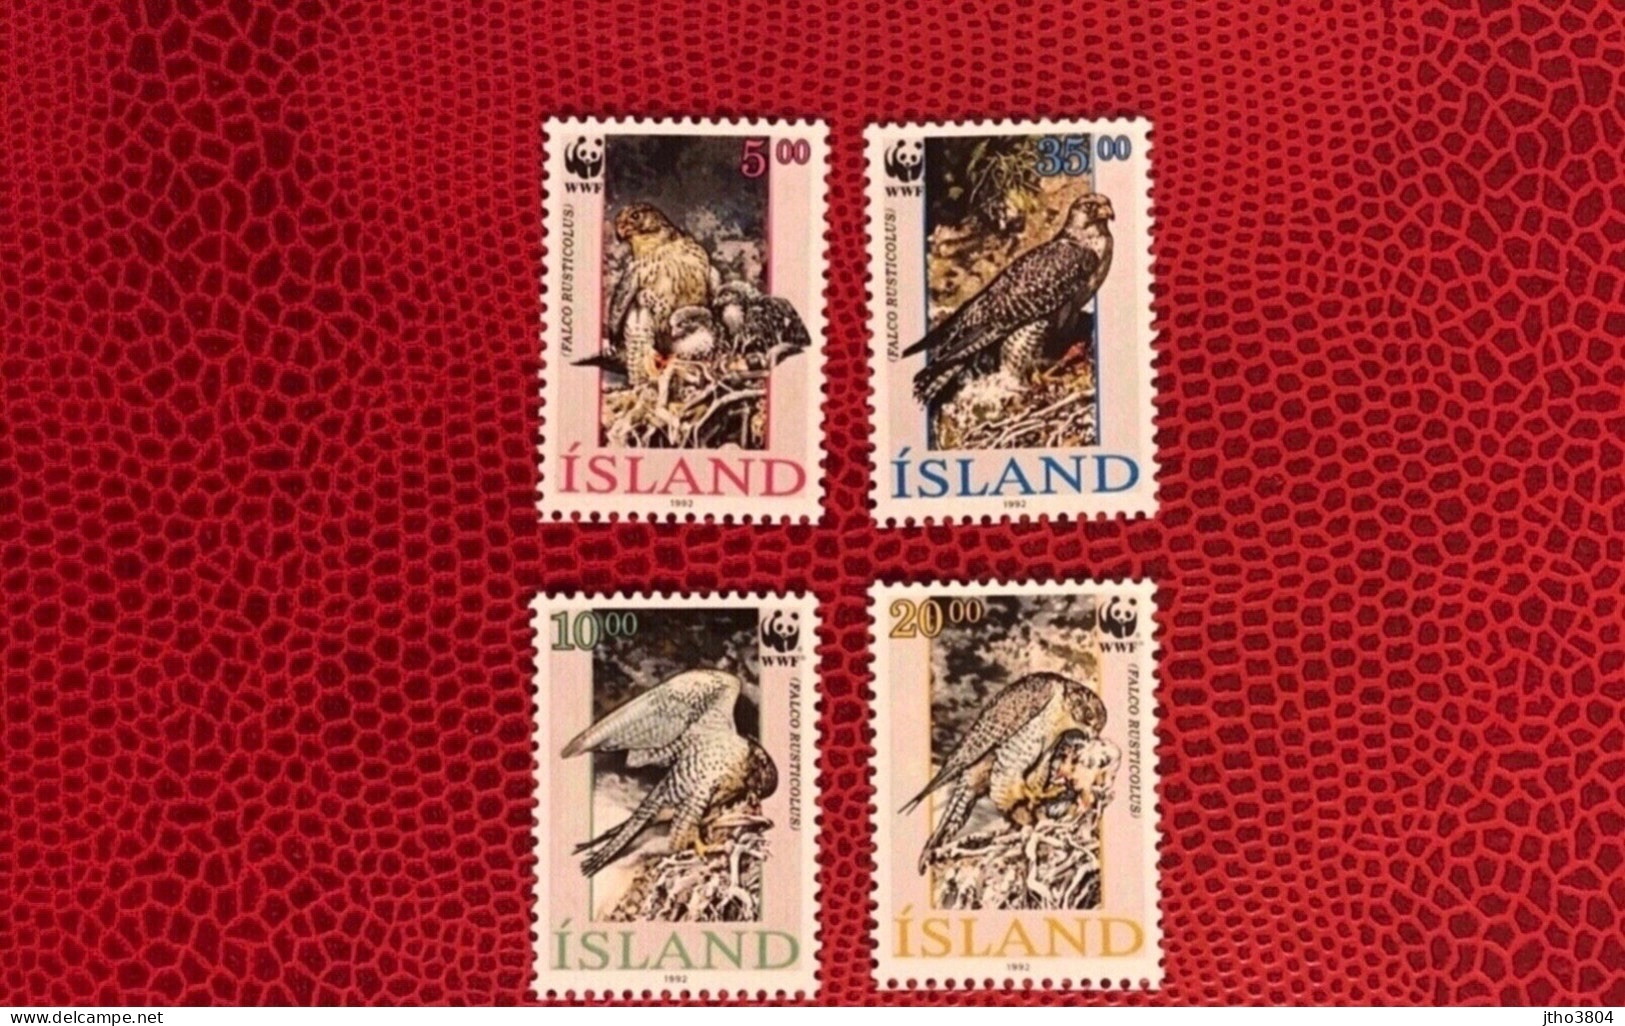 Islande 1992 WWF 4v Neuf MNH ** MI 776 / 779 Ucello Falcon Oiseau Bird Pájaro Vogel Iceland Island - Unused Stamps